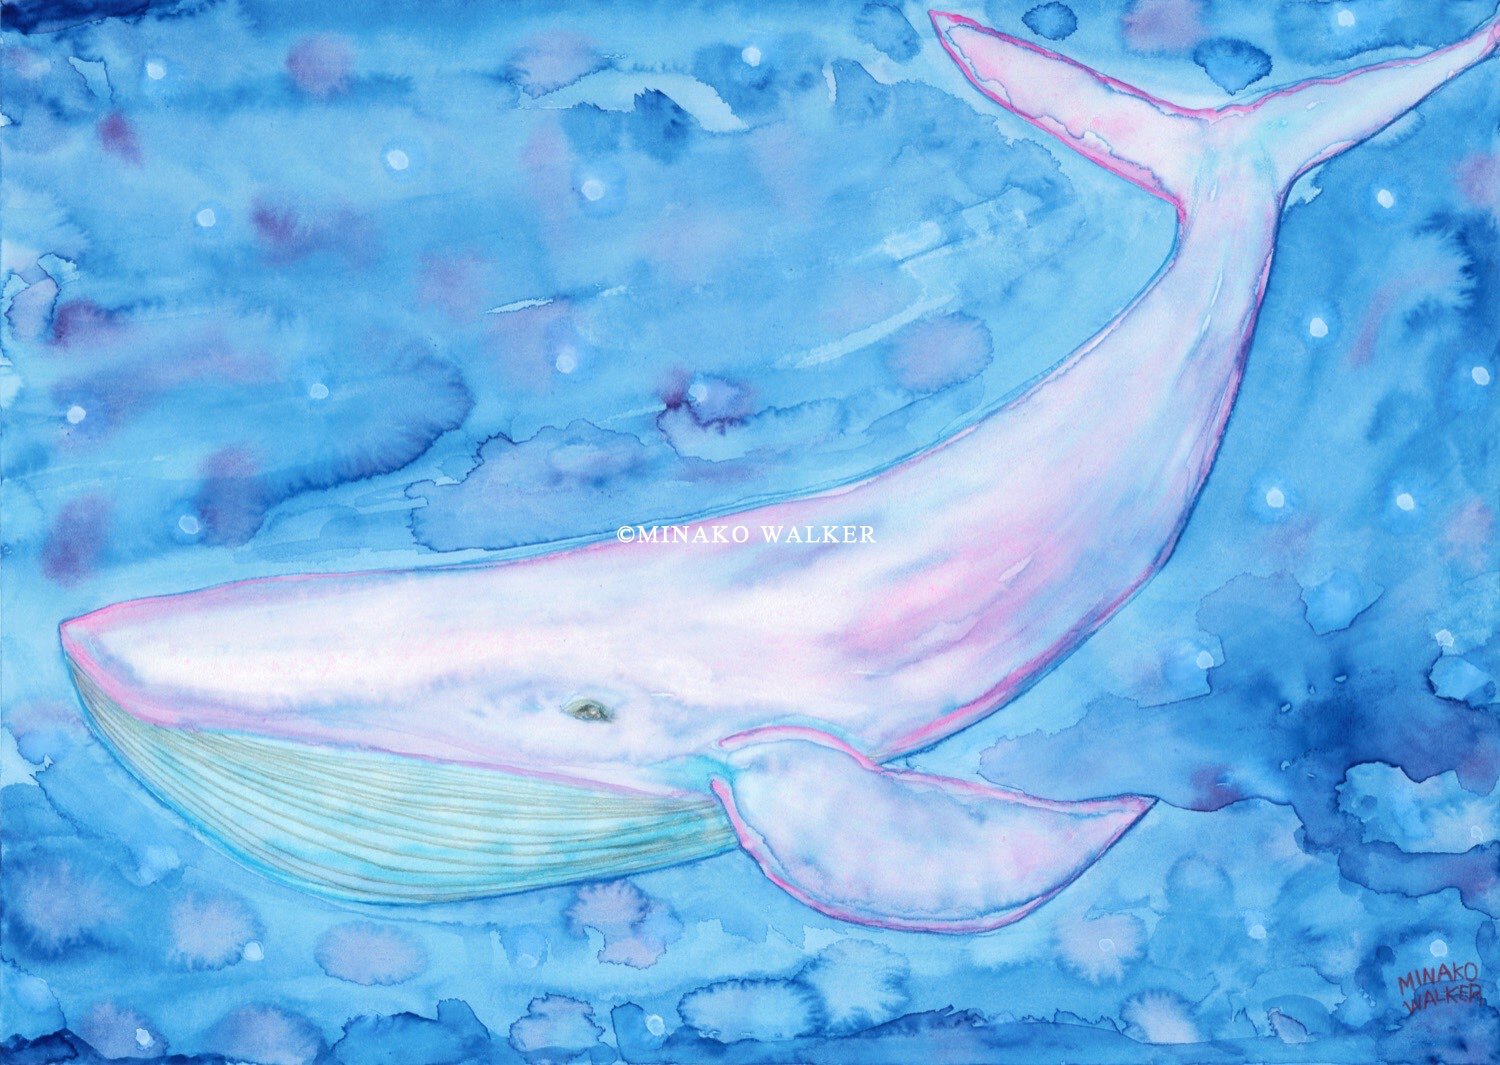 2. Pink Whale | 桃色クジラ